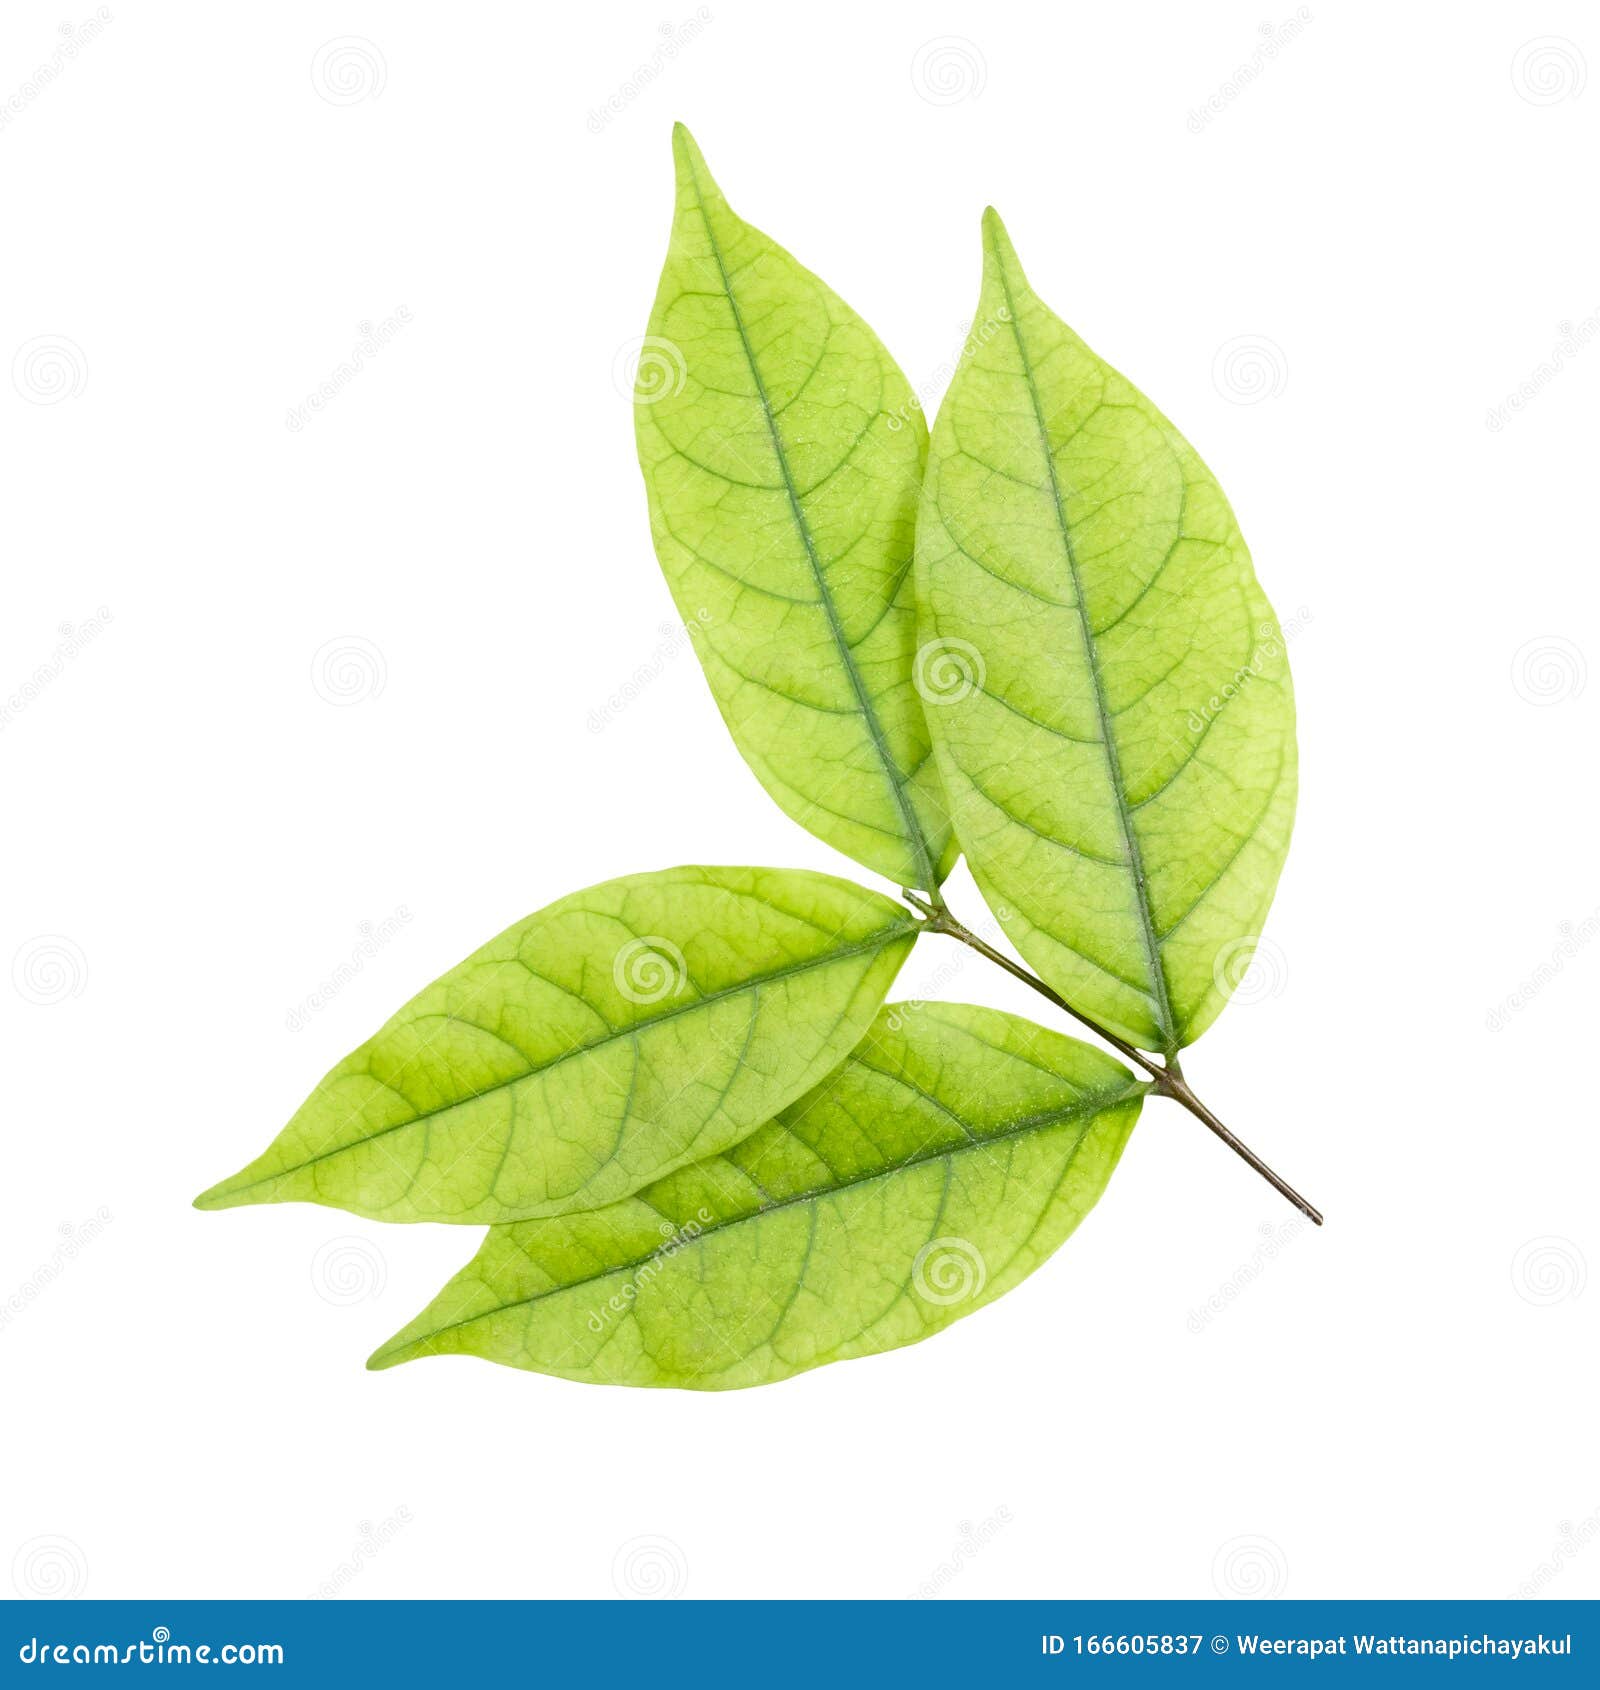 small leaf and limb mok tree